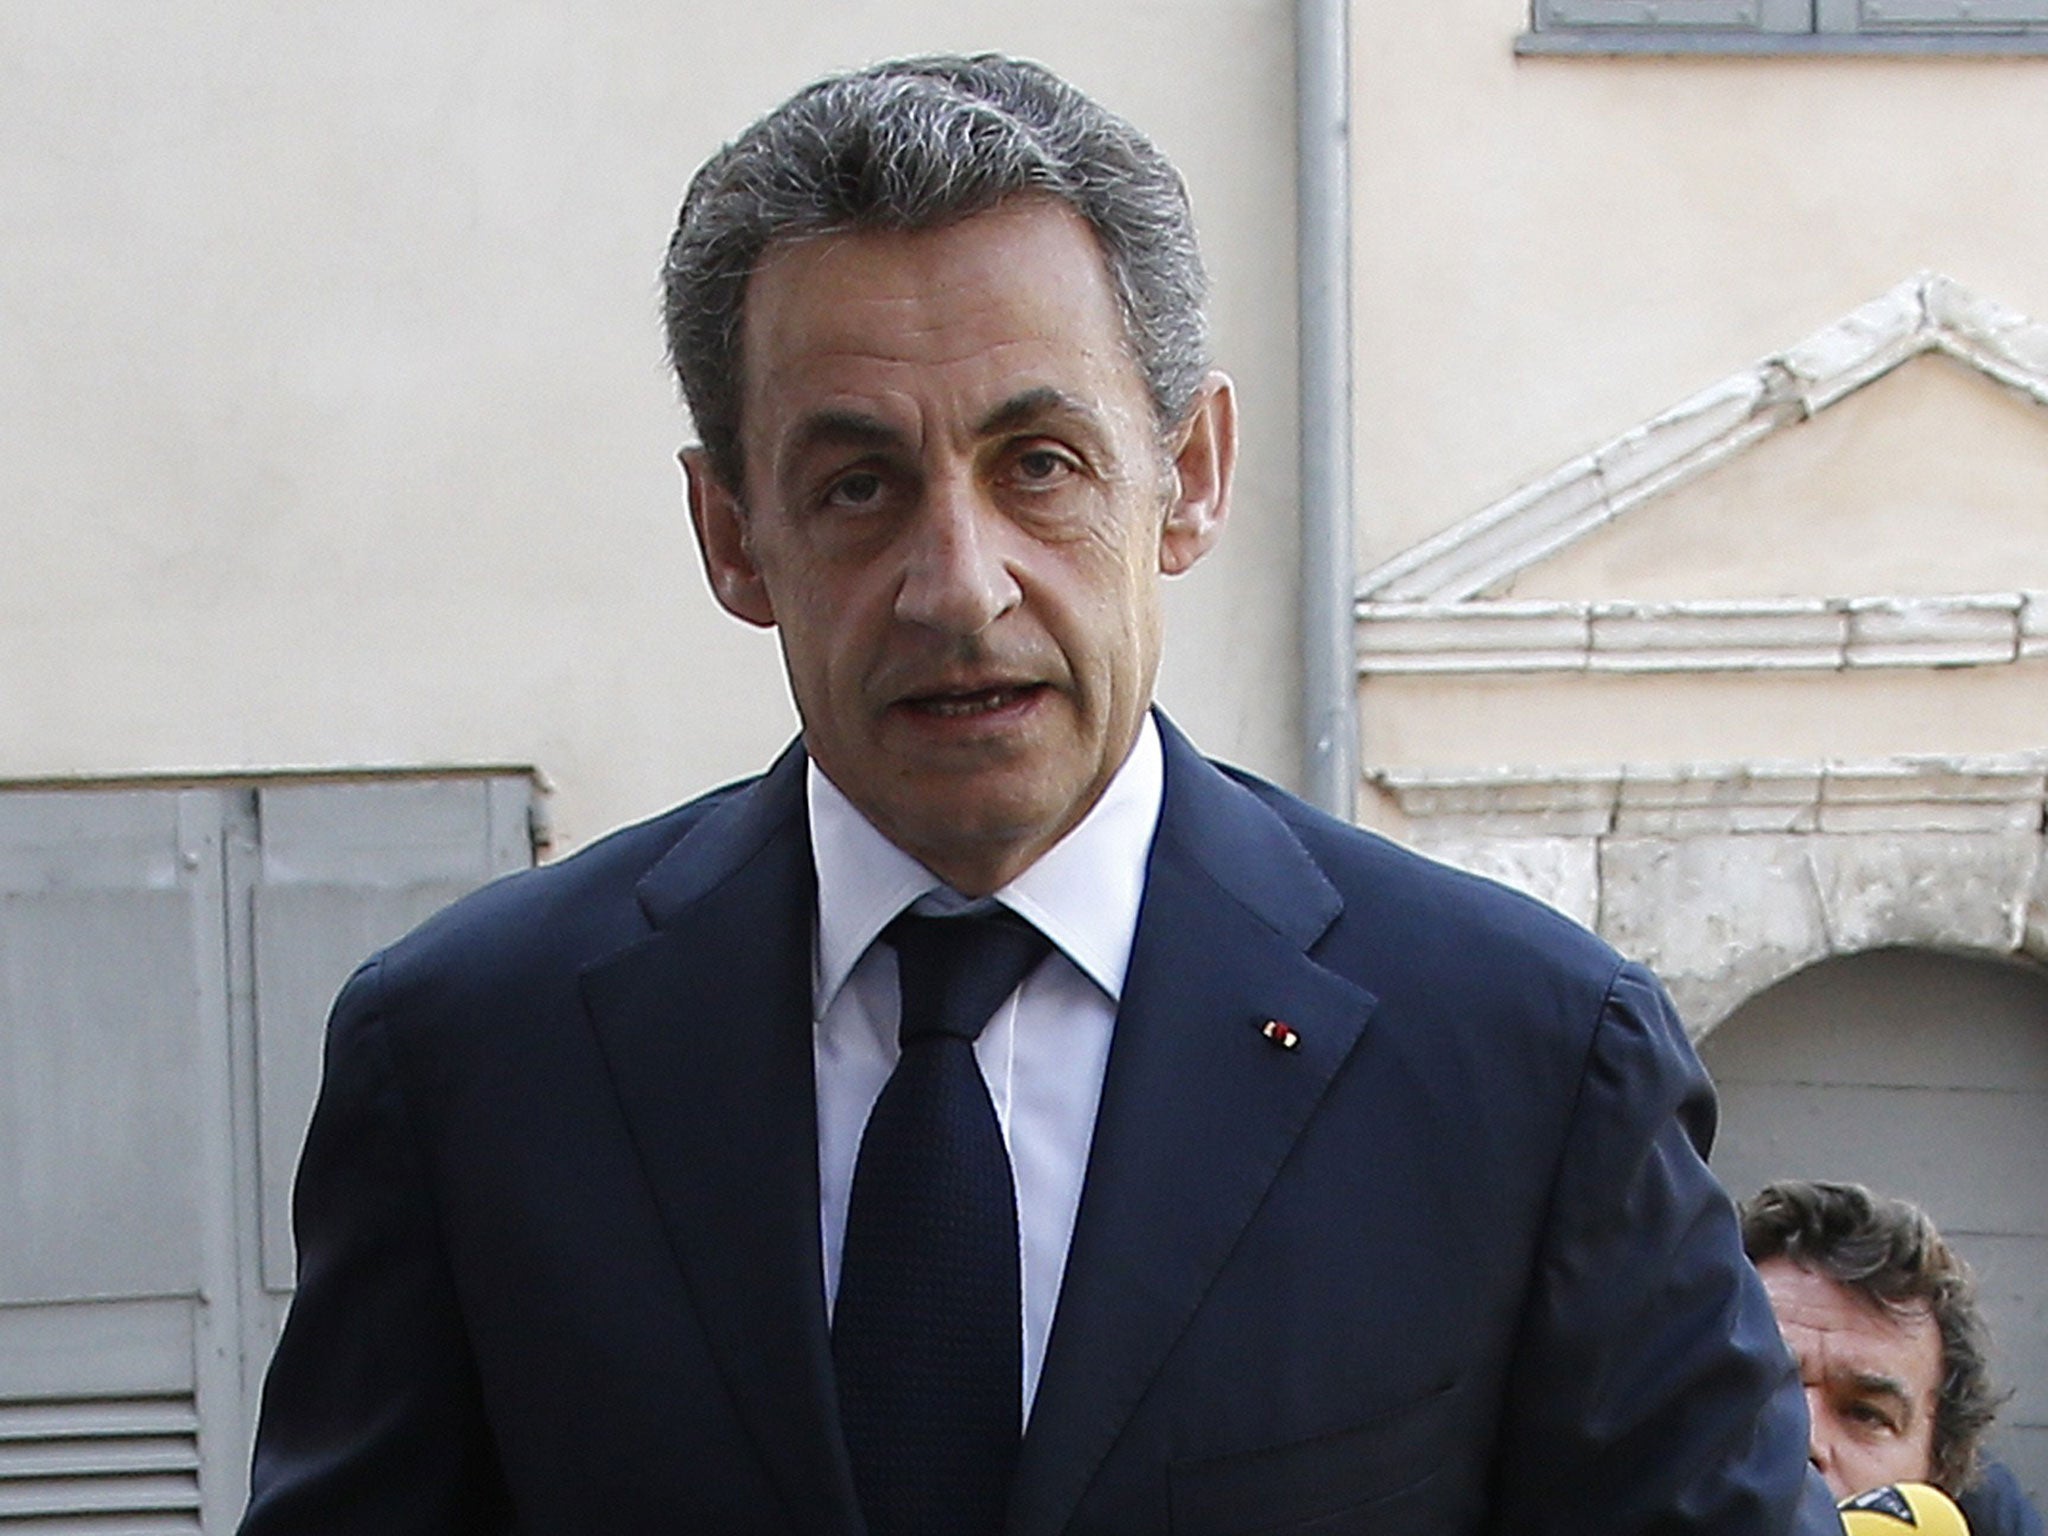 Nicolas Sarkozy has reversed his former stance, praising his successor’s efforts in Greece